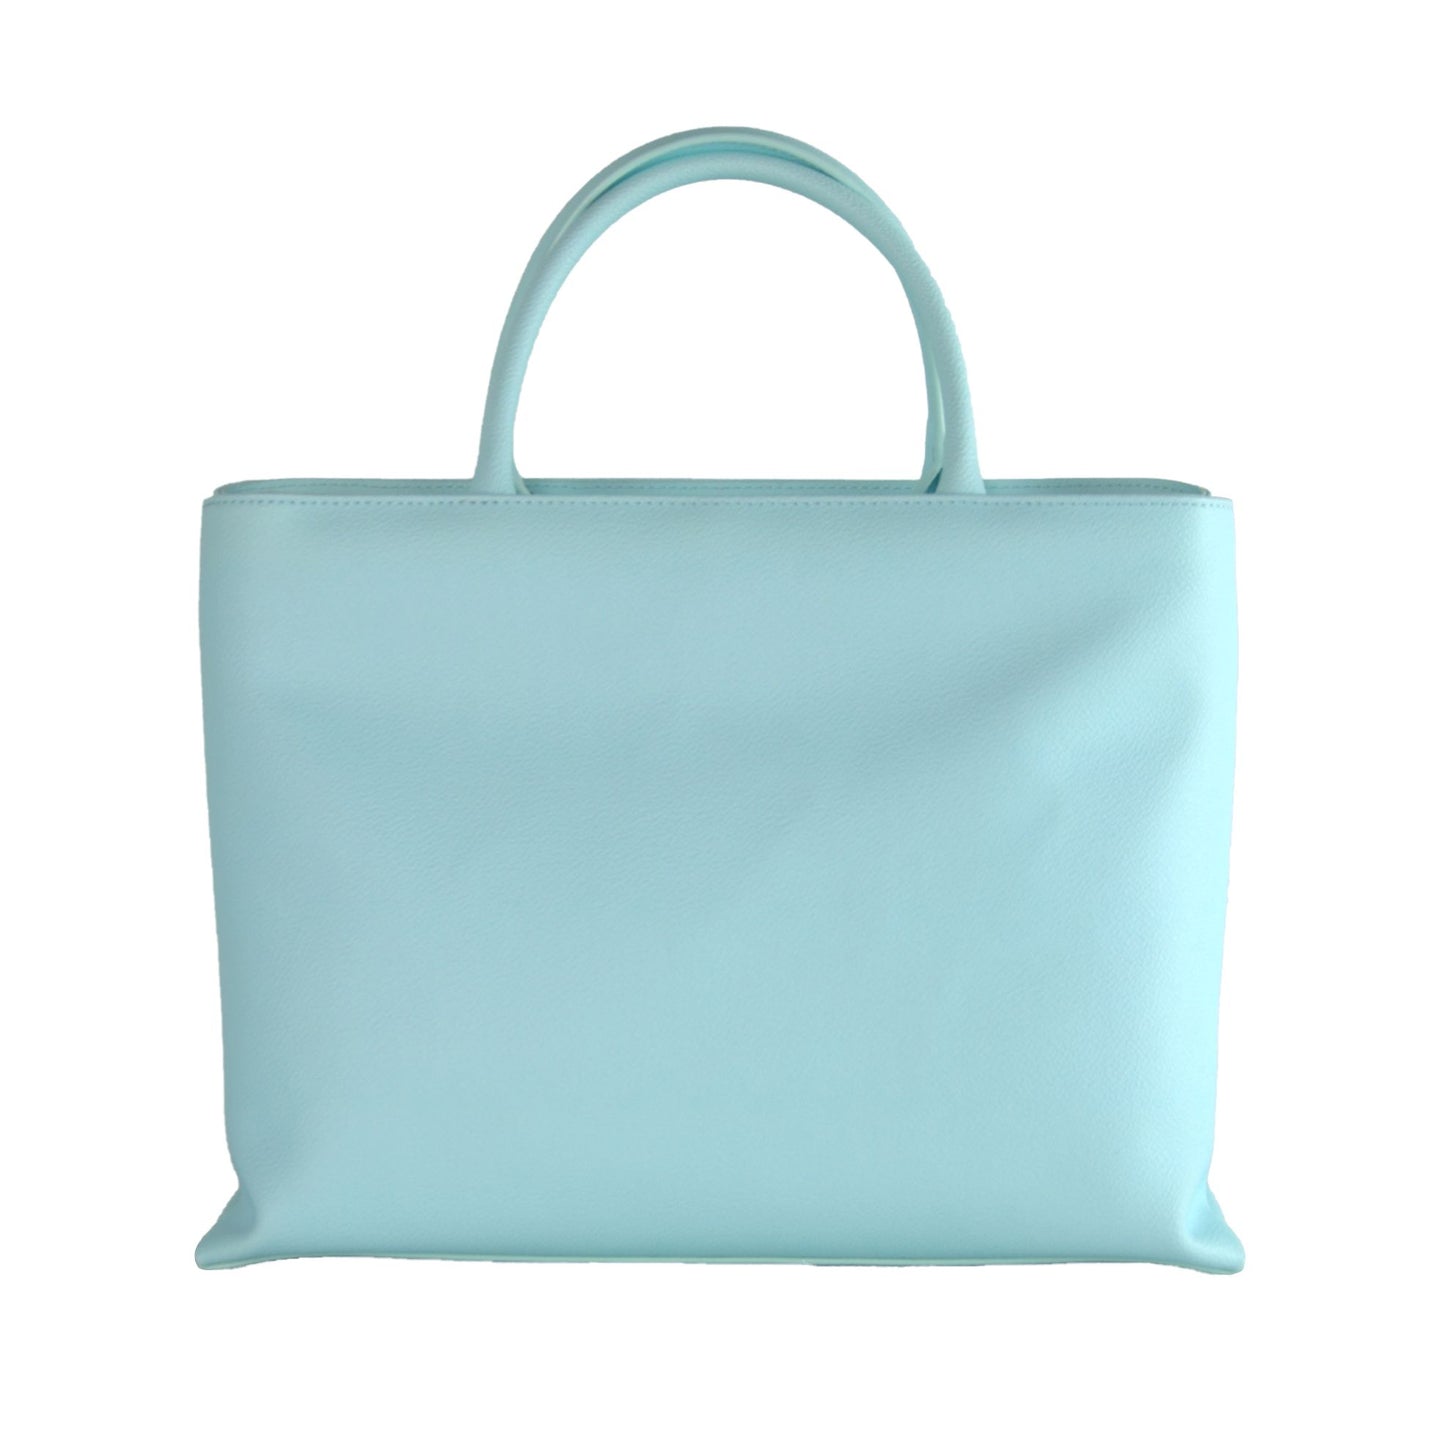 Elegant Azure Handbag for the Fashion-Forward